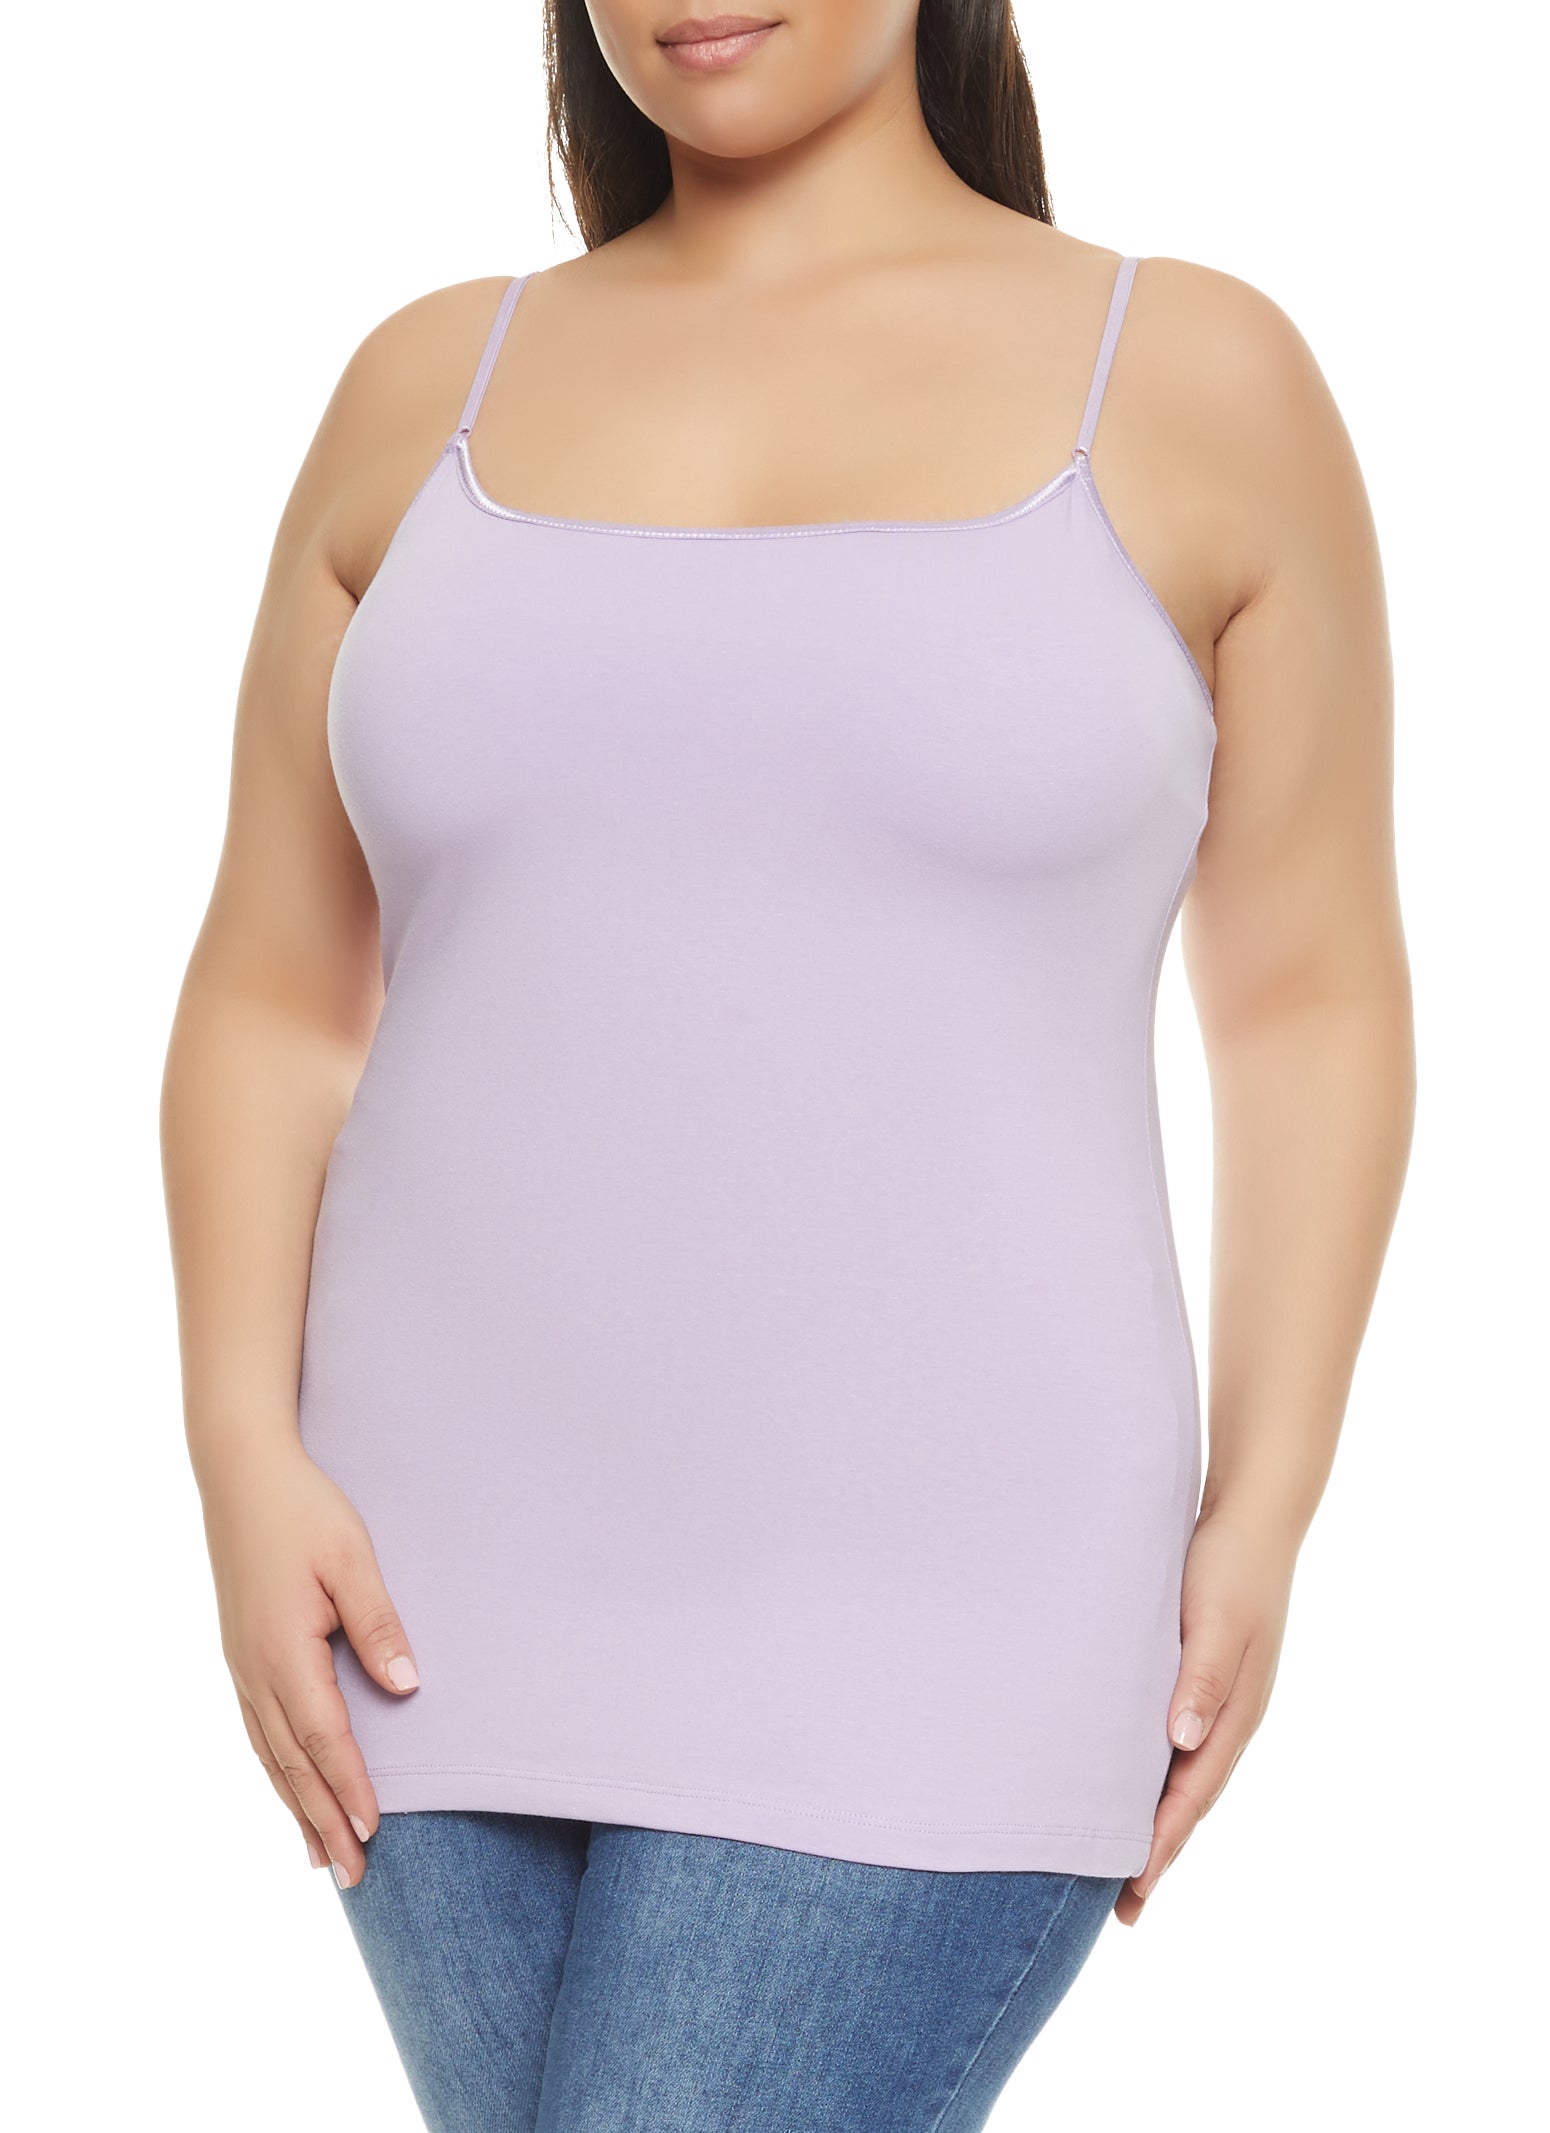  Tank Tops For Women Shelf Bra Camisoles Scoop Neck Cotton  Cami Basic Adjustable Strap Undershirt White/Hot Pink